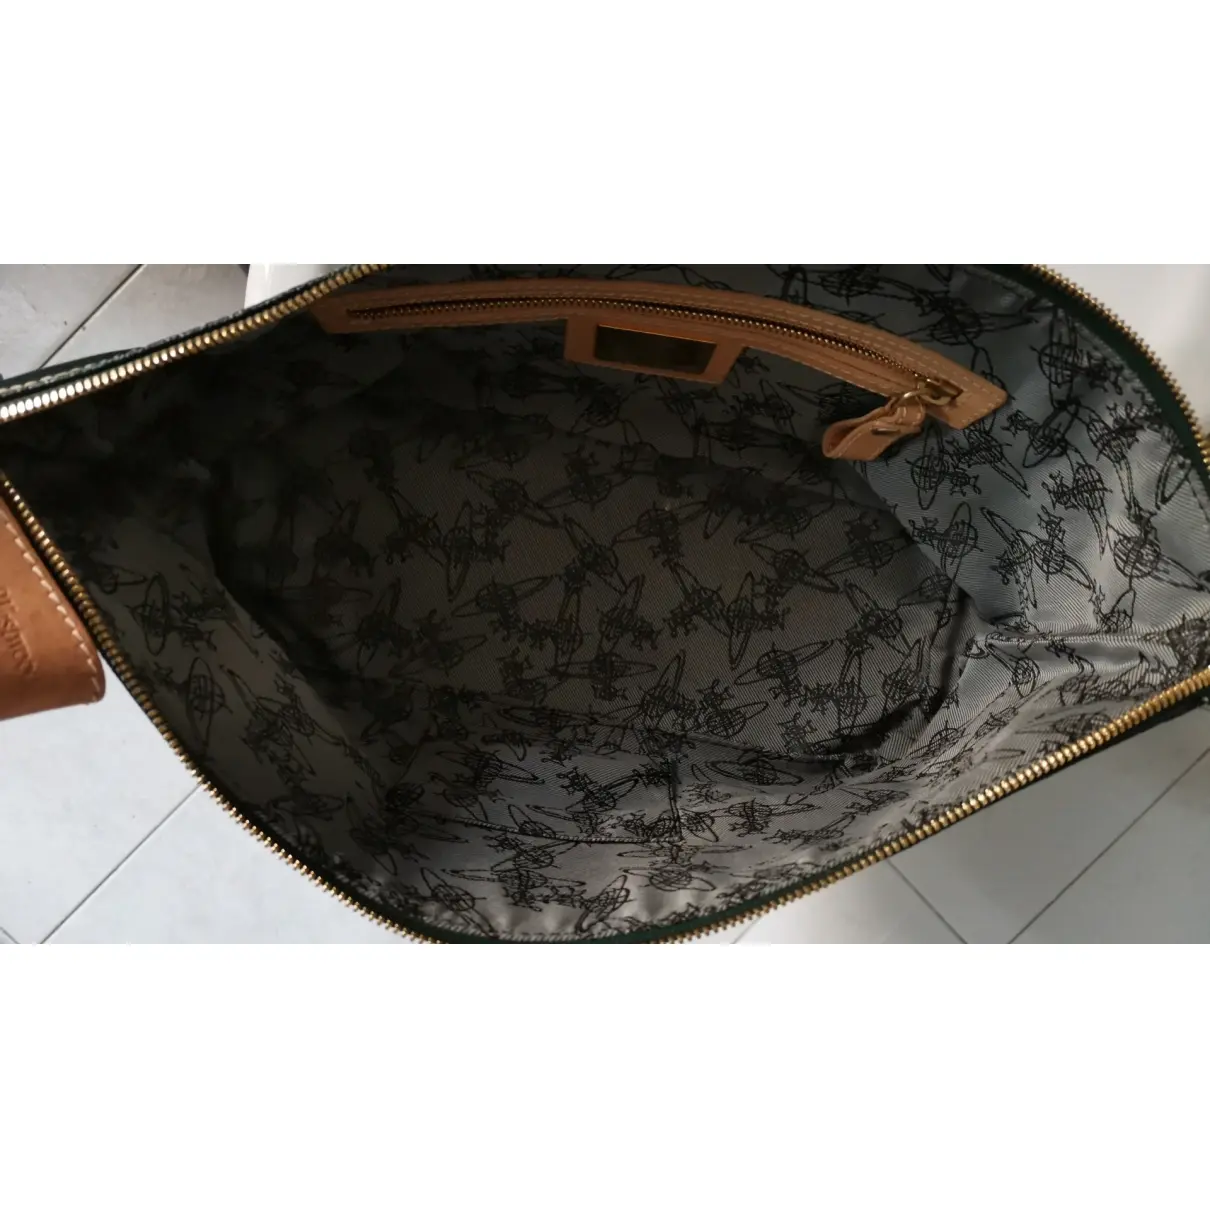 Buy Vivienne Westwood Leather travel bag online